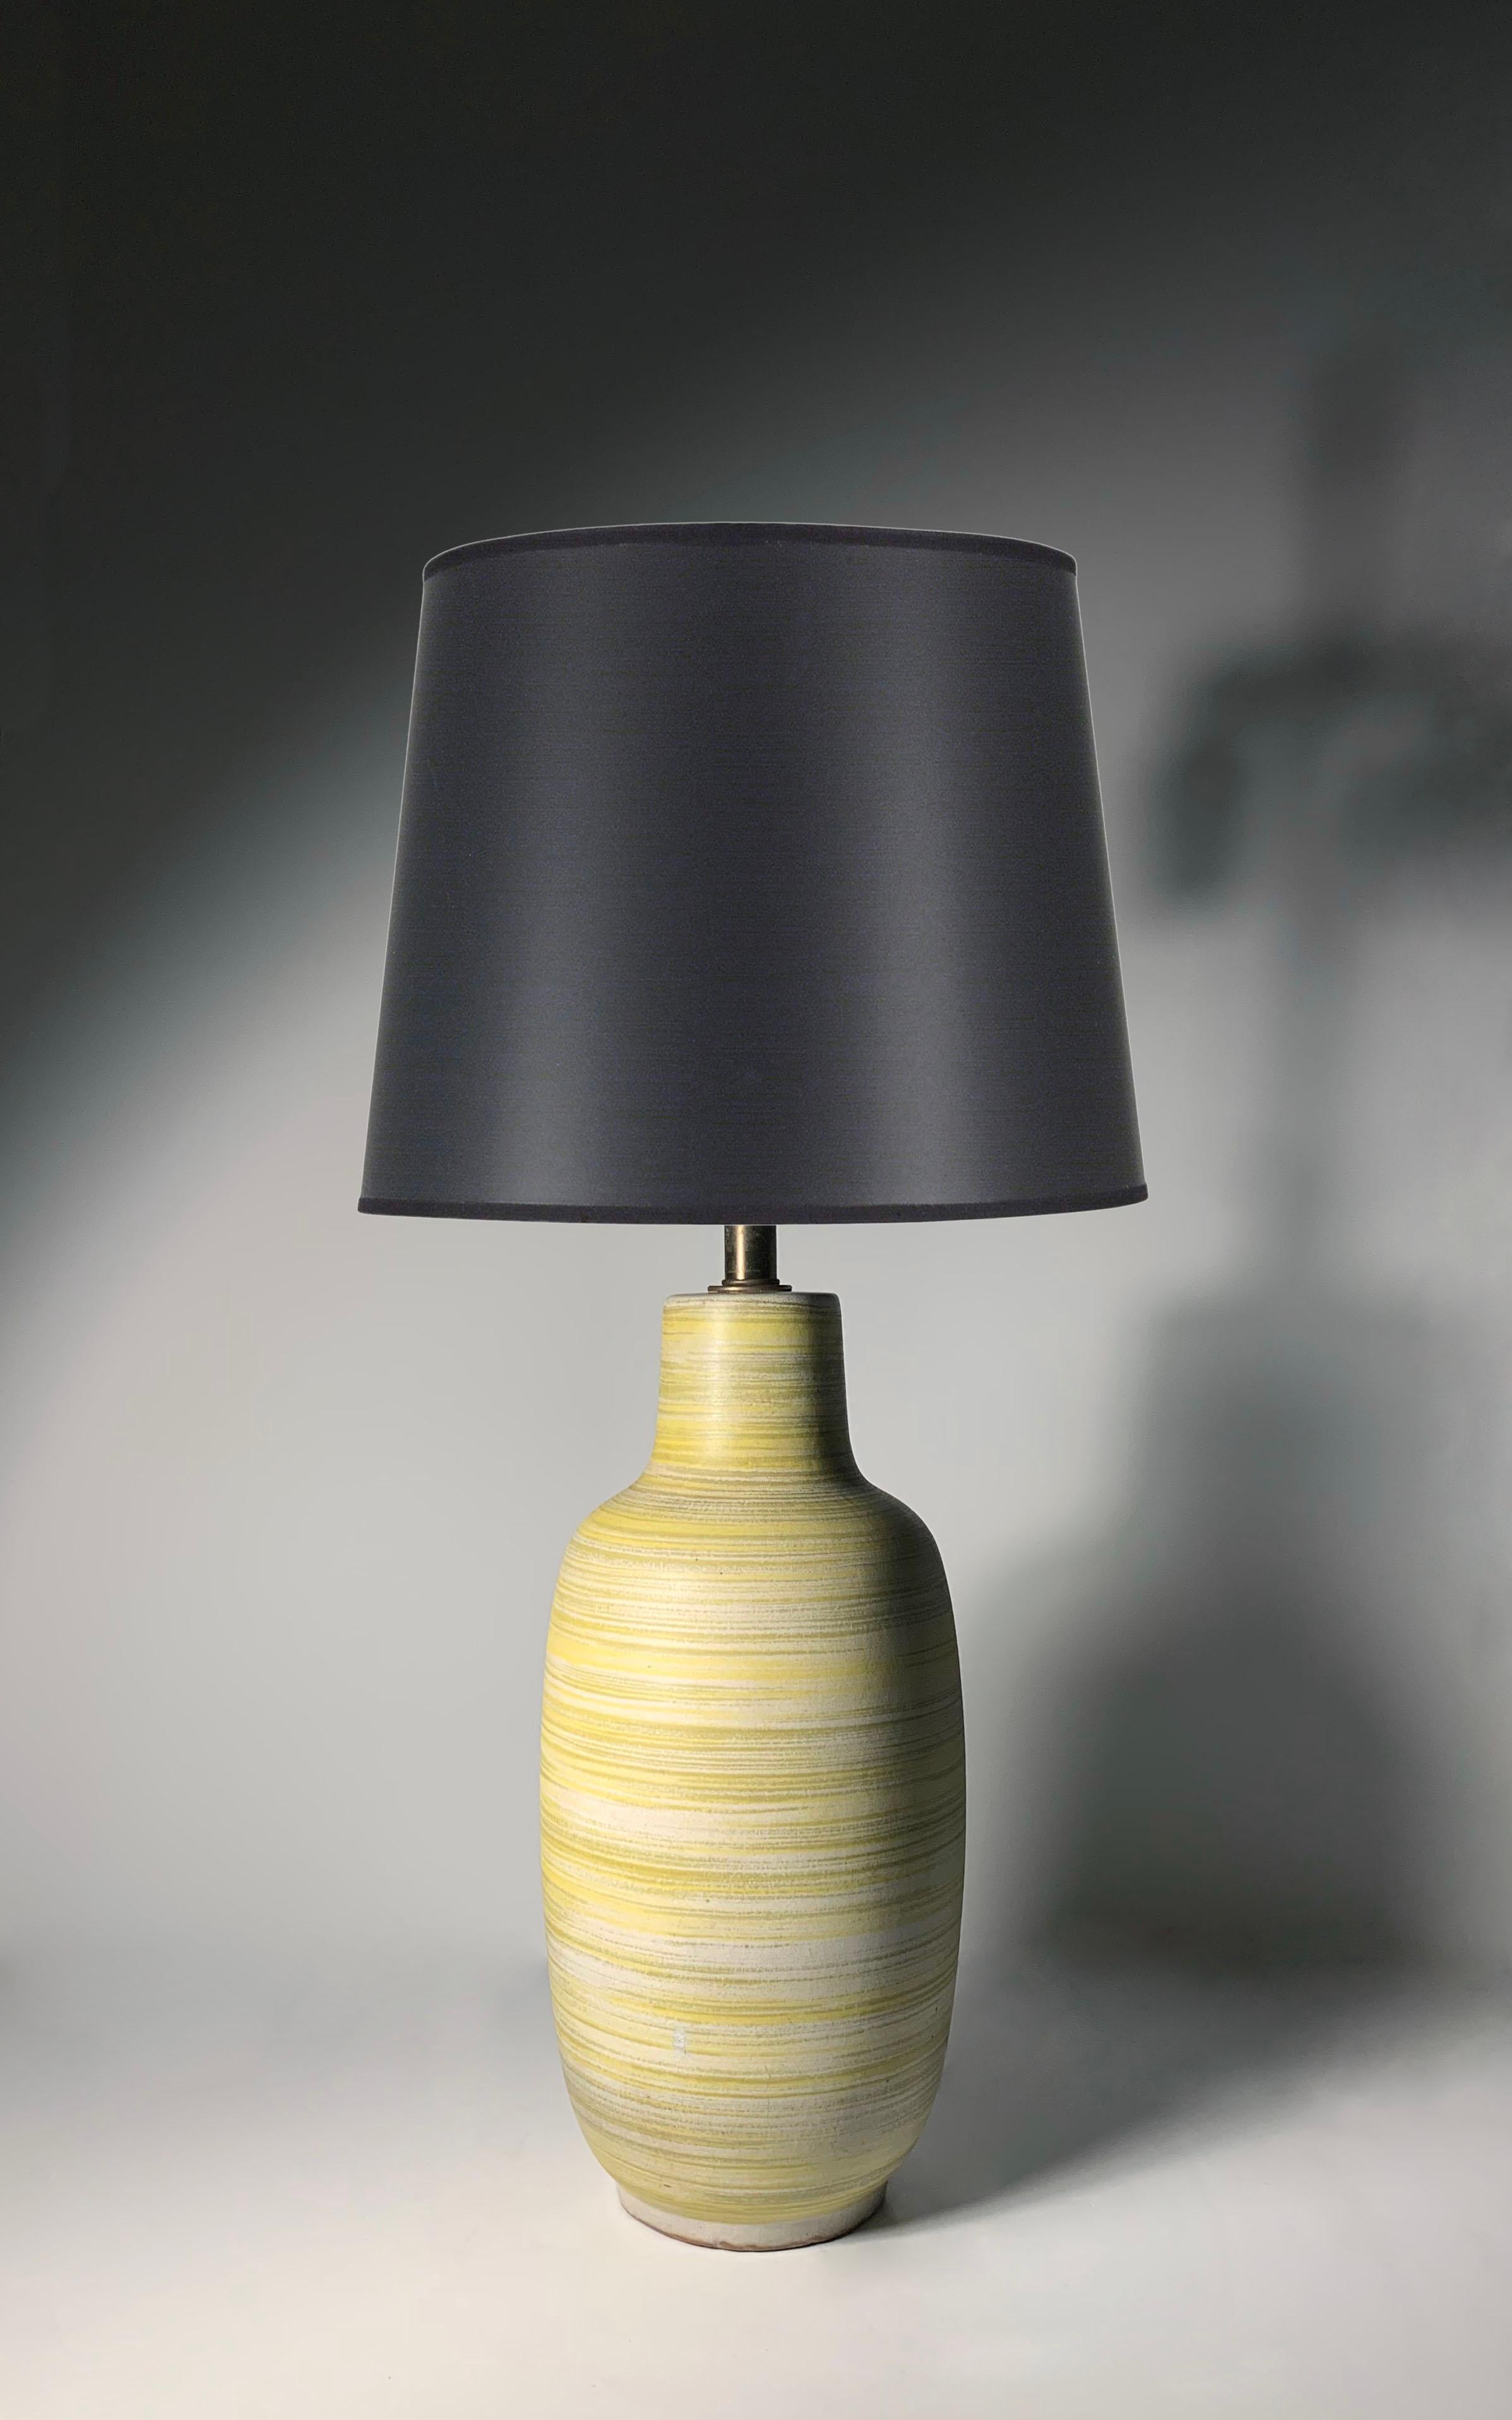 Vintage Brushed Yellow/Green Ceramic Table Lamp by Lee Rosen for Design Technics.  Manner of Gordon Martz

29